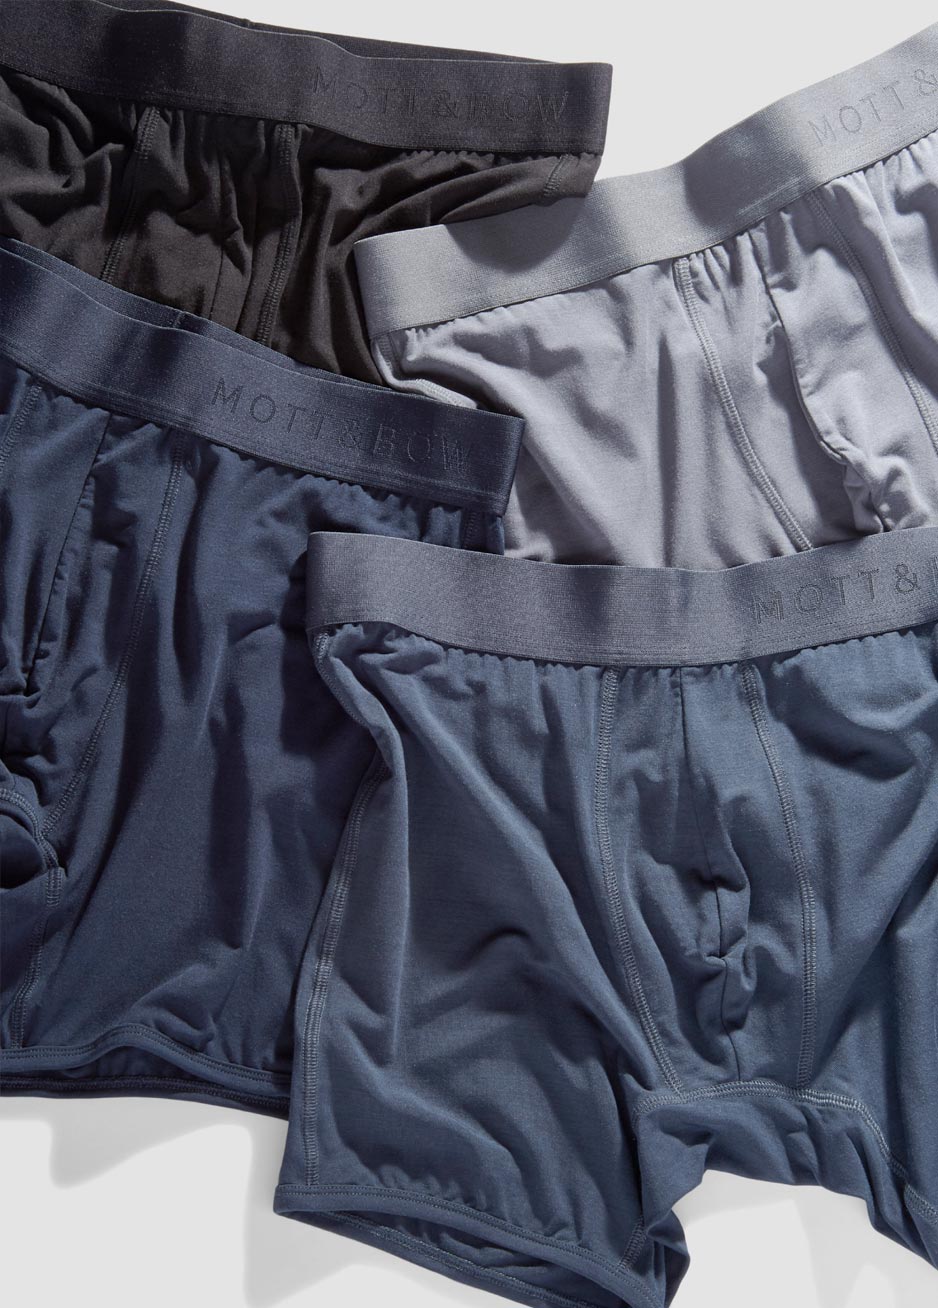 Mott & Bow Men's Underwear Review: Comfortable, Minimalist Designs